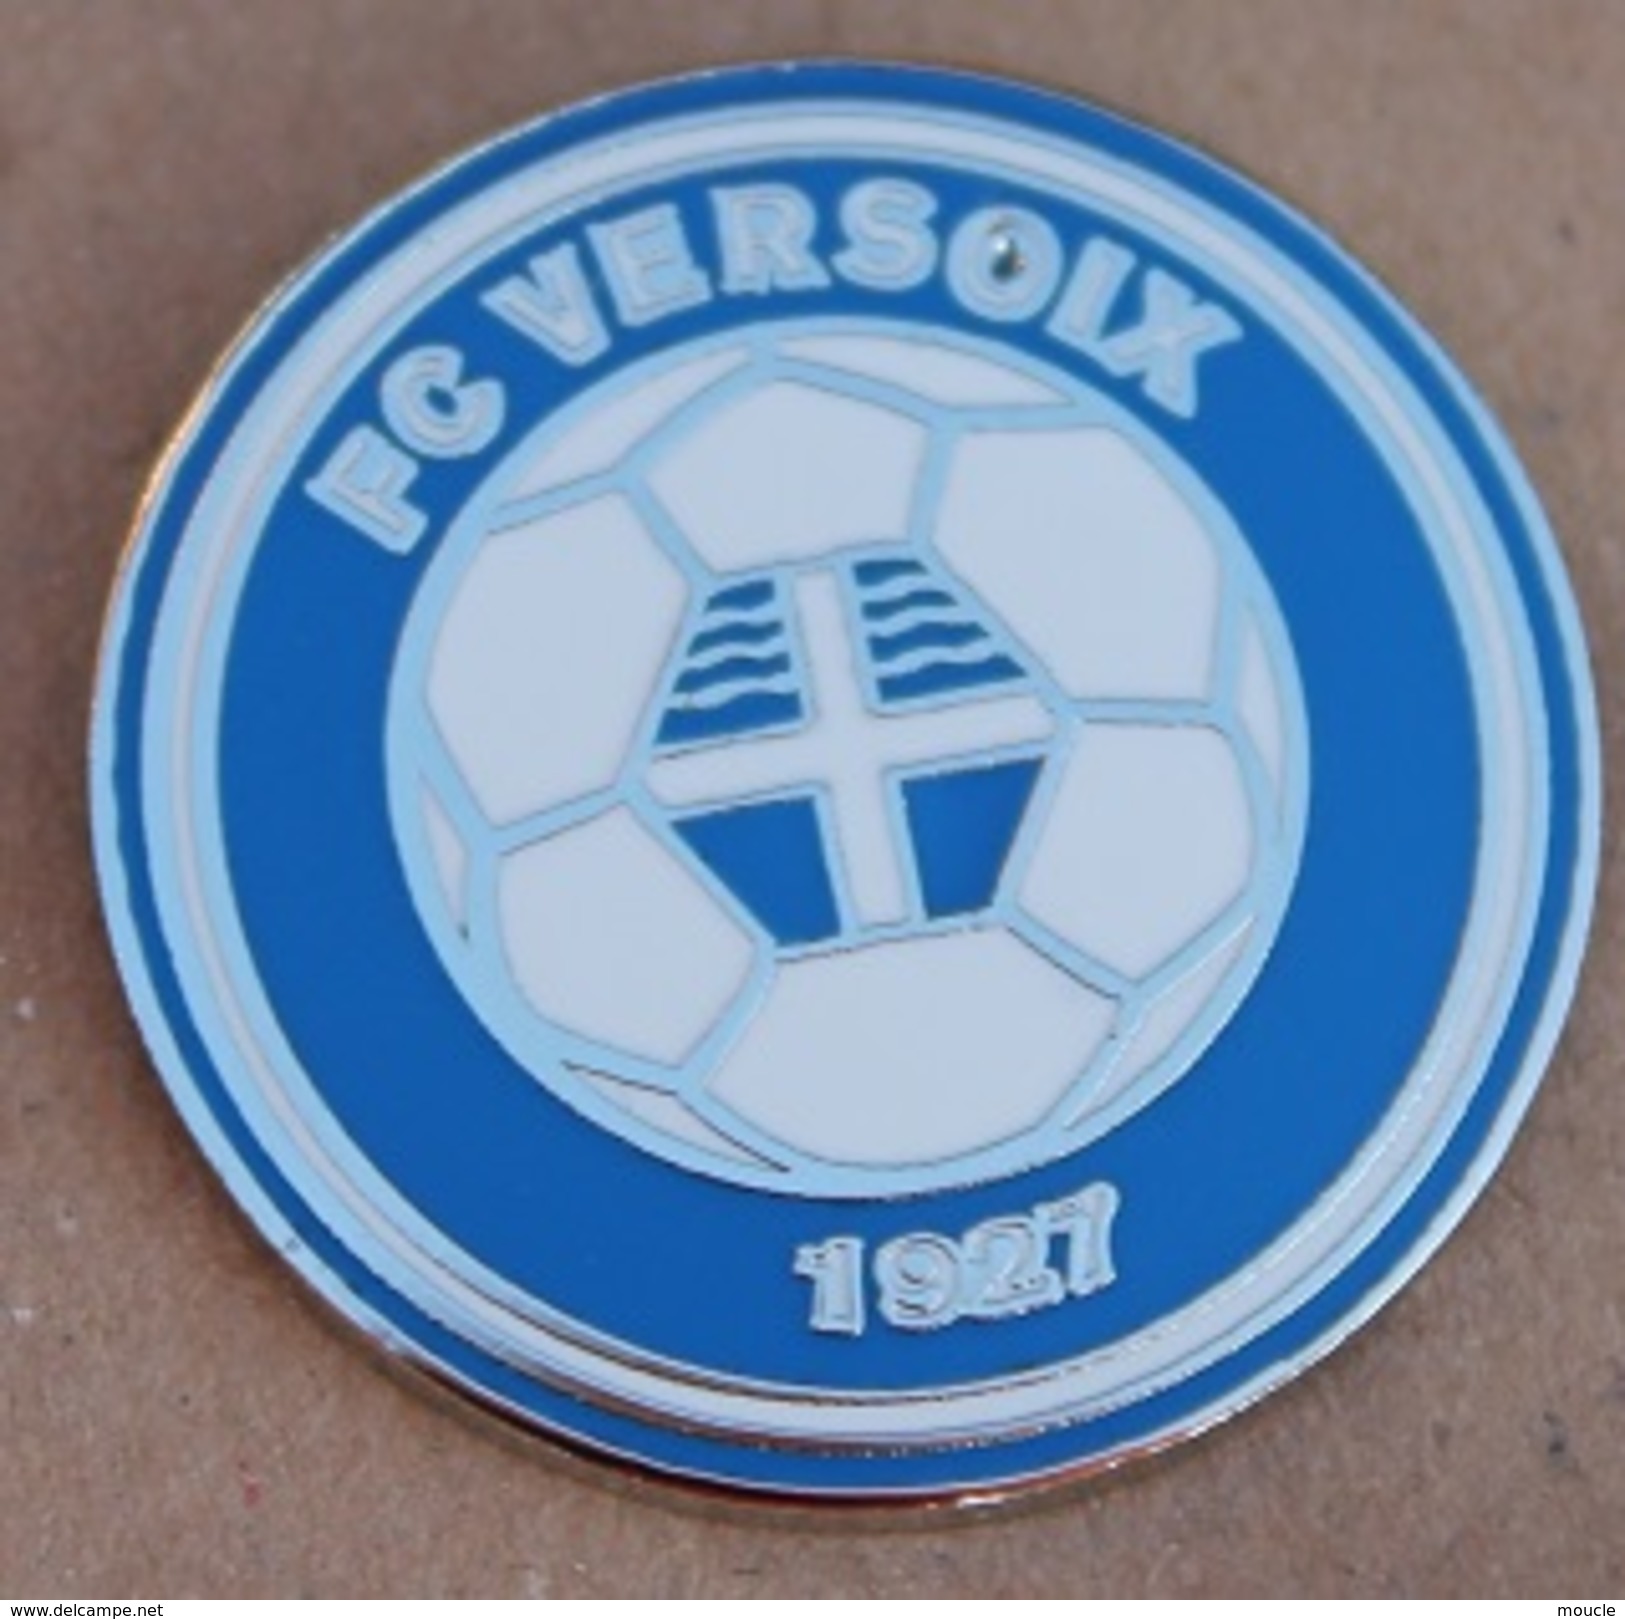 FC VERSOIX 1927  - FOOTBALL CLUB VERSOIX - GENEVE-  SUISSE - BALLON -     (16) - Calcio